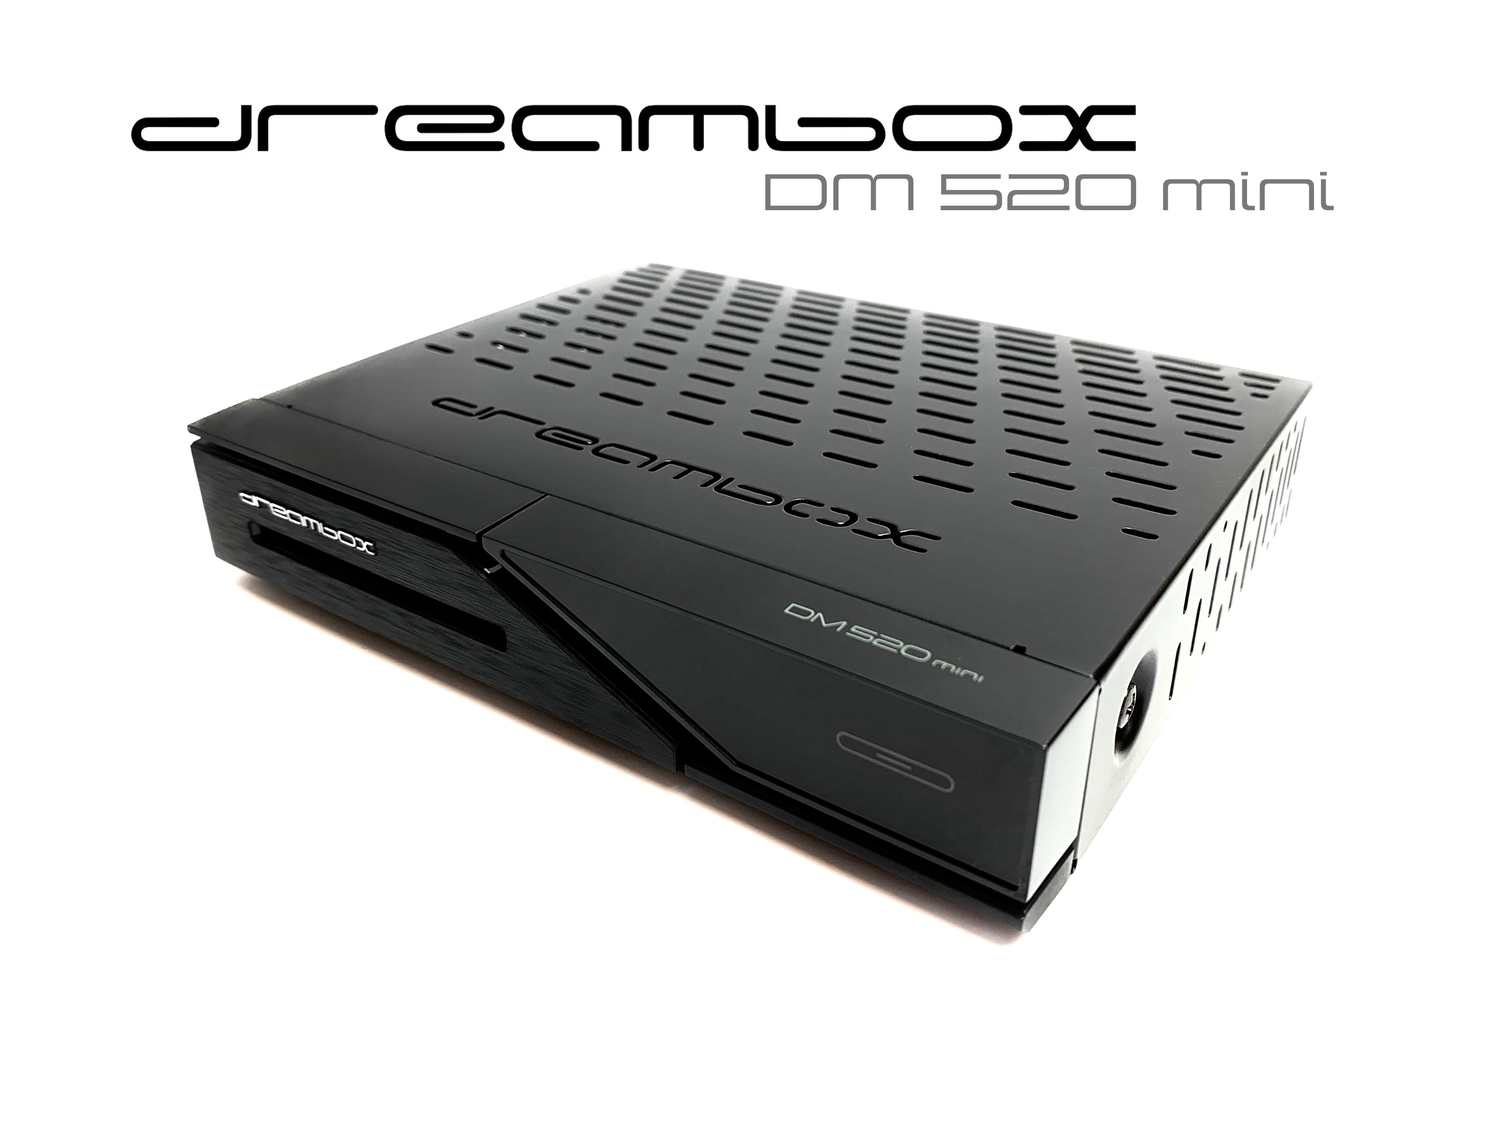 Dreambox DM520 mini HD 1x DVB-S2 Tuner PVR ready Full HD 1080p H.265 Linux Receiver